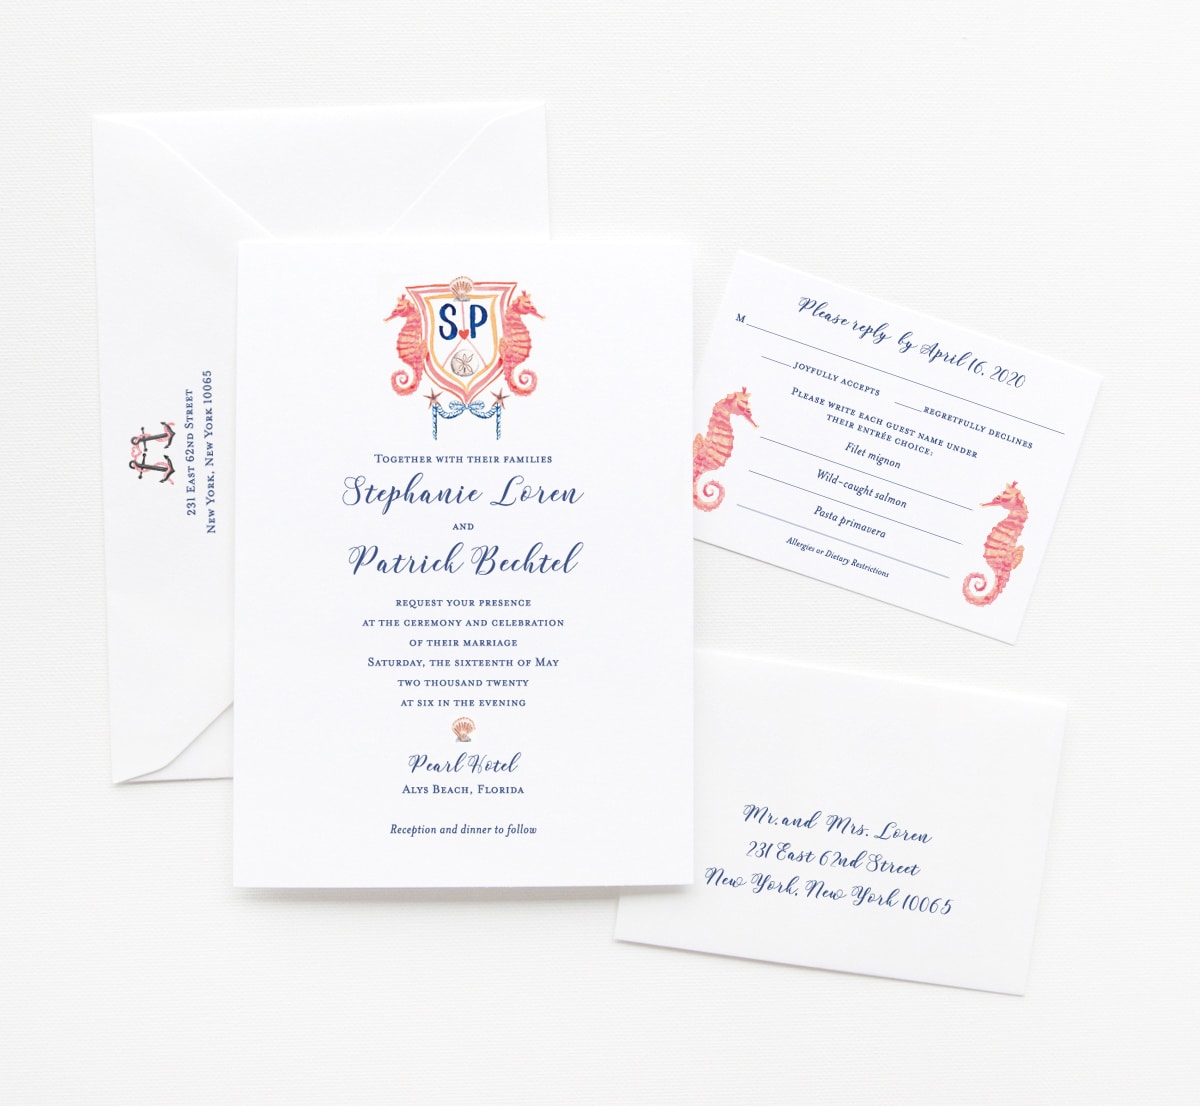 27 Sea-worthy Nautical Wedding Invitations. Watercolor Seahorses Wedding Crest custom wedding invitations by artist Michelle Mospens. | Mospens Studio